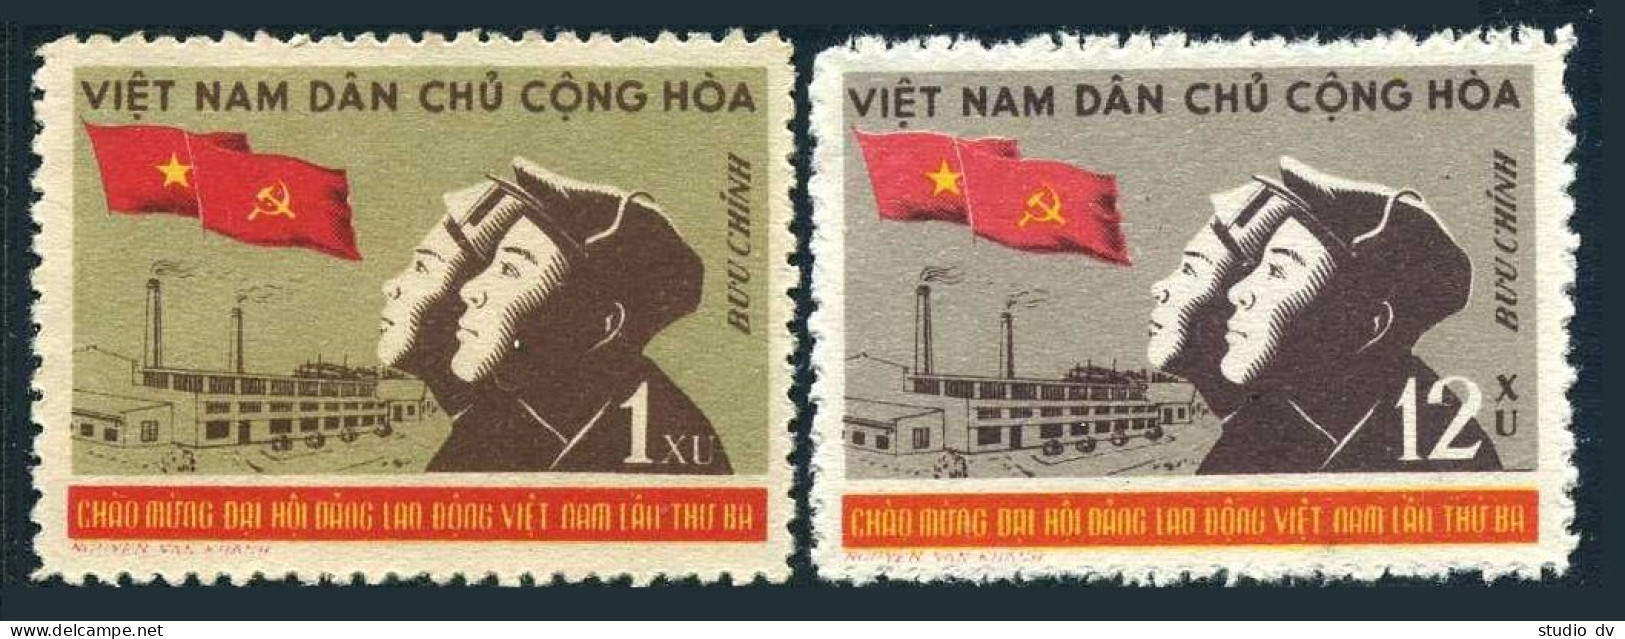 Viet Nam 137-138,MNH.Michel 142-143. 3rd Communist Party Congress,1960. - Viêt-Nam